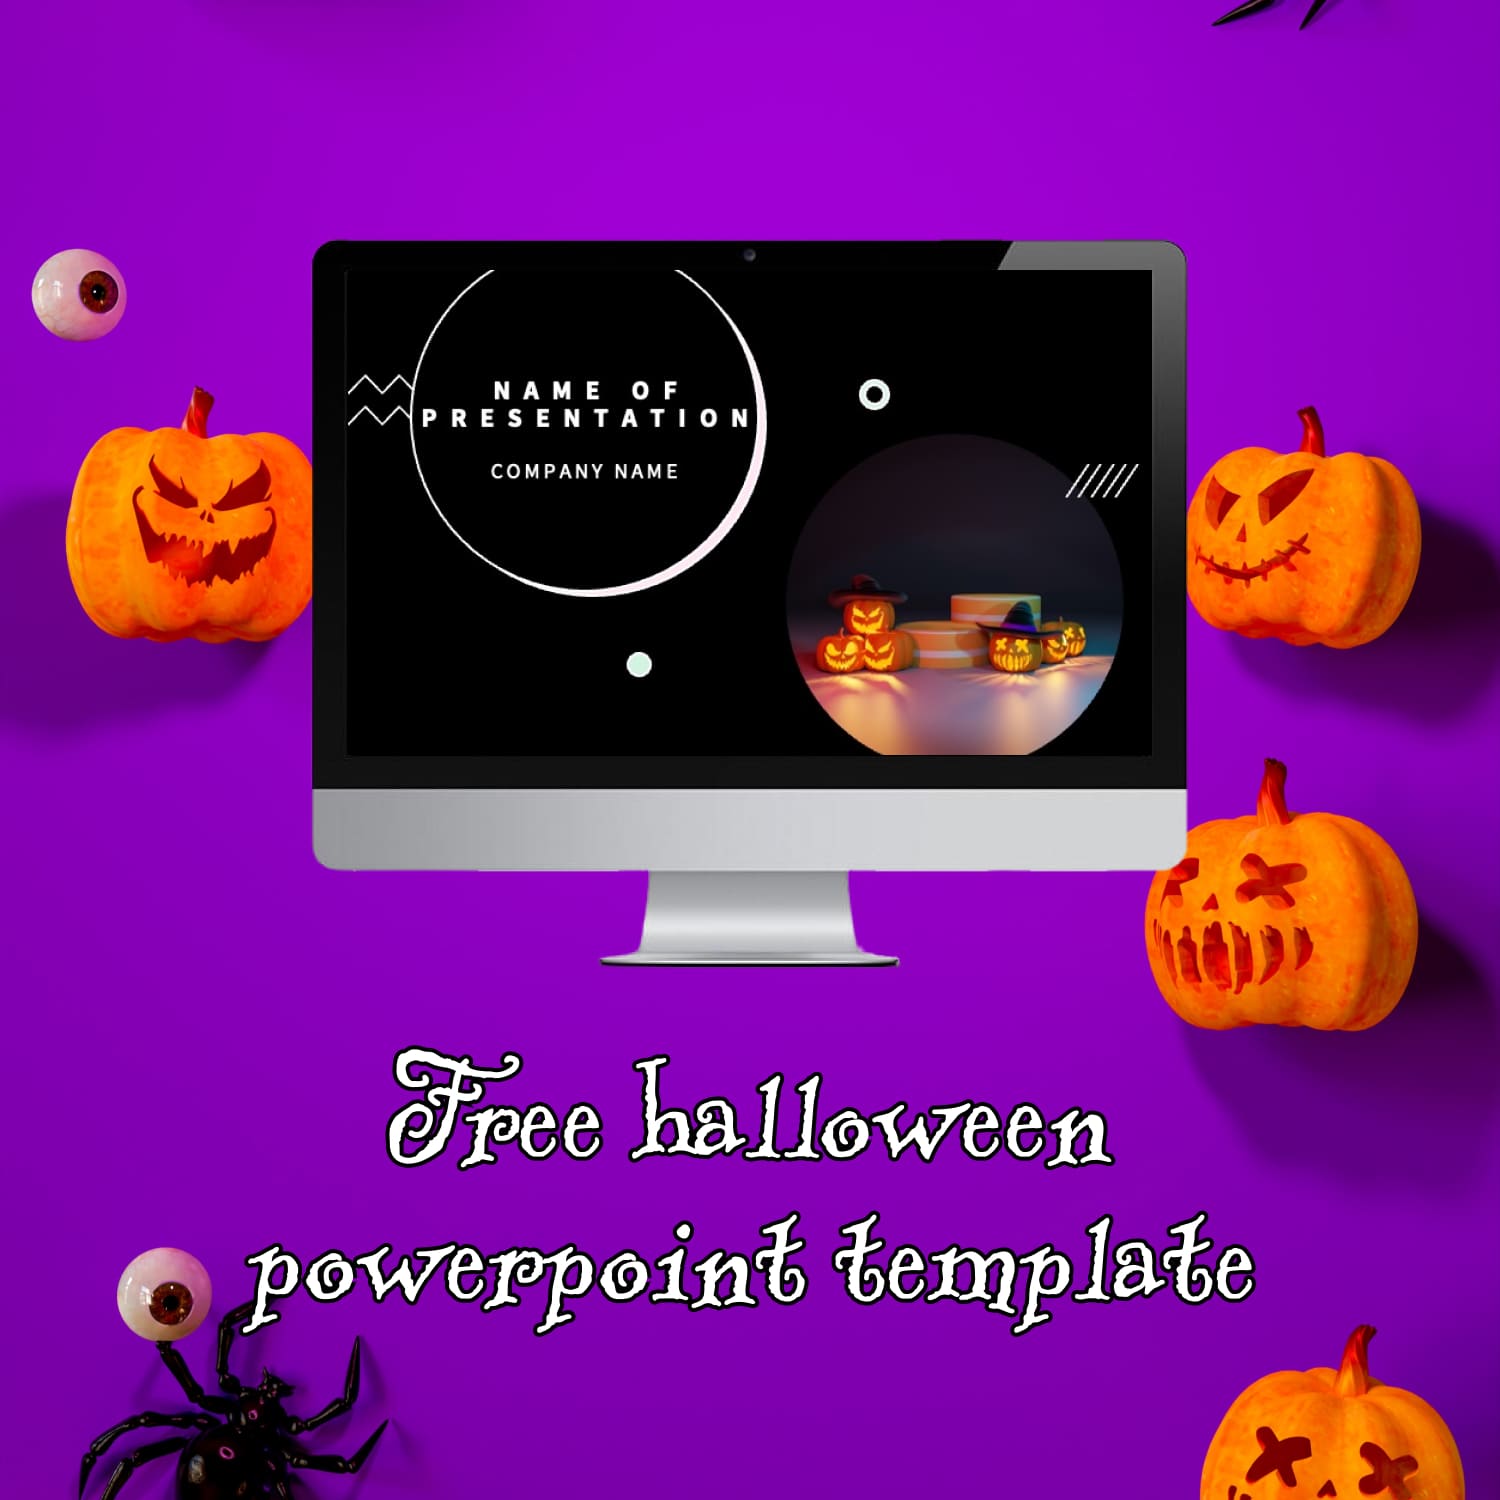 Free Halloween Powerpoint Template.